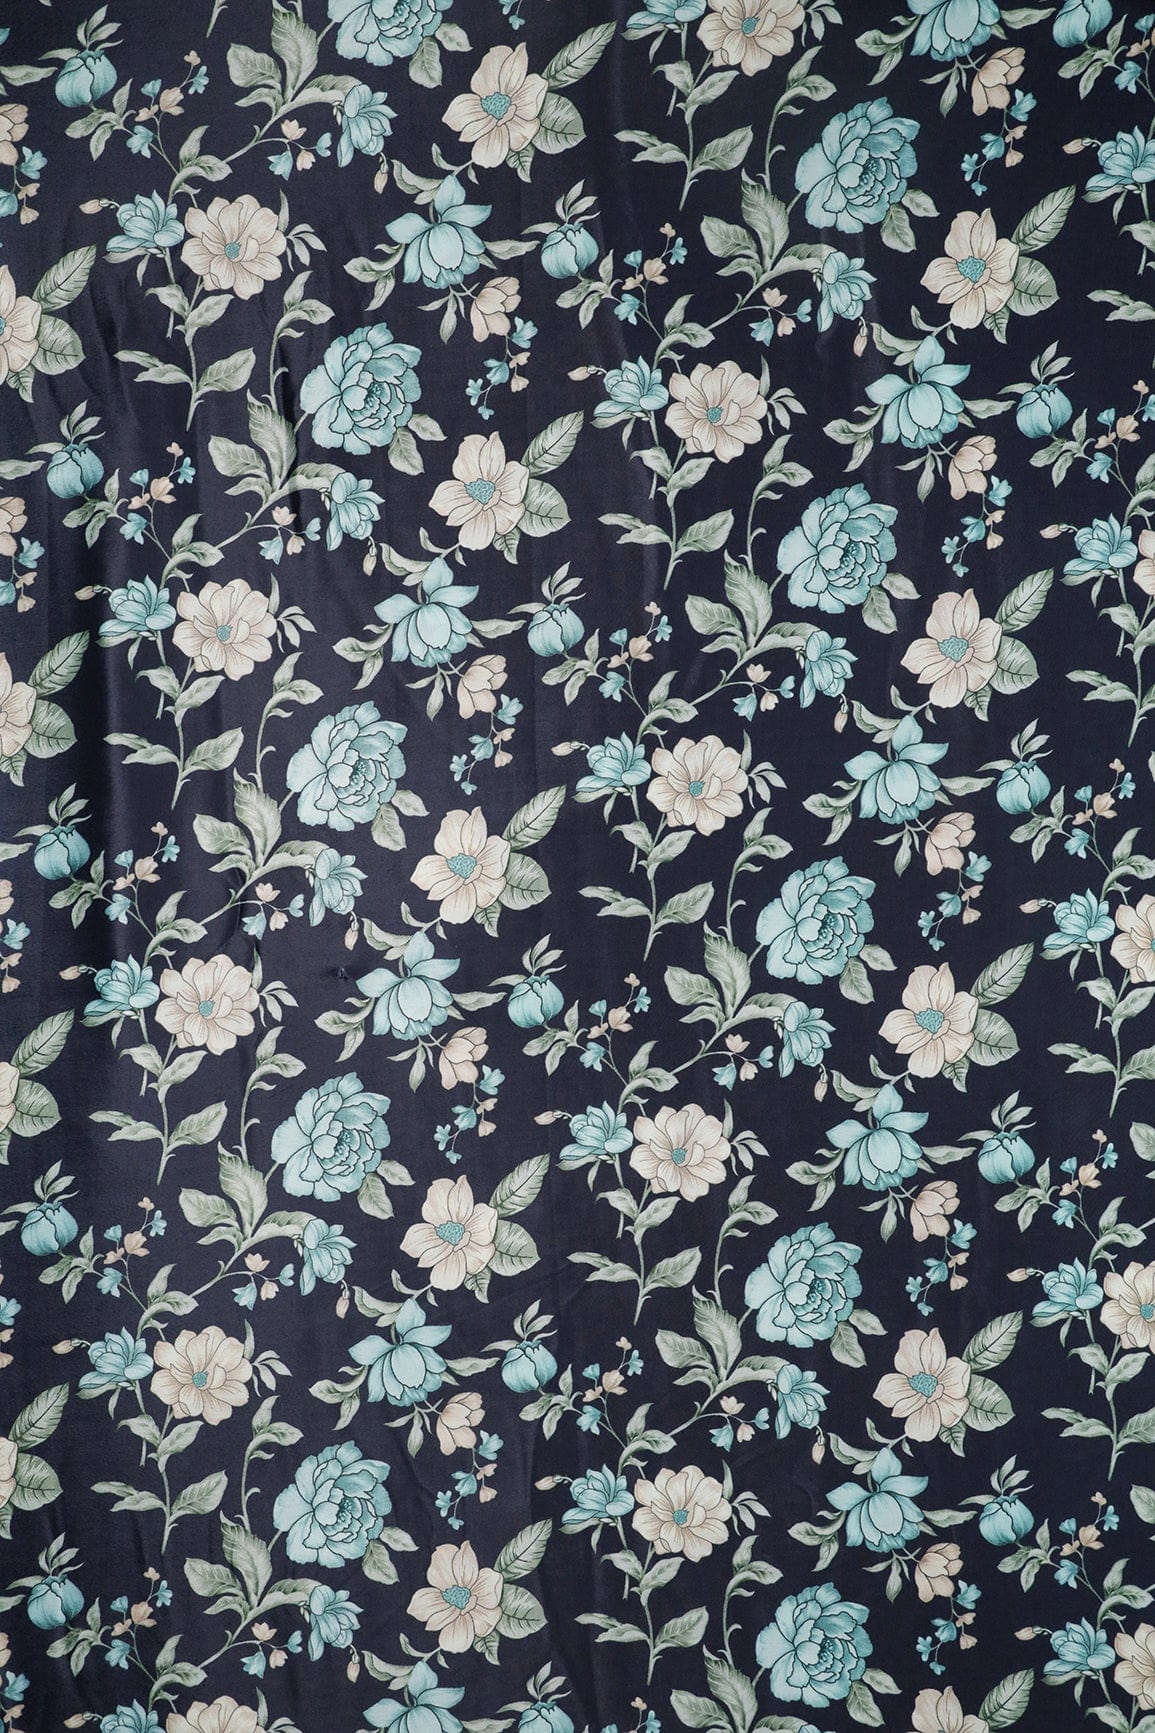 doeraa Prints Teal And Light Beige Floral Pattern Digital Print On Dark Navy Blue Malai Crepe Fabric